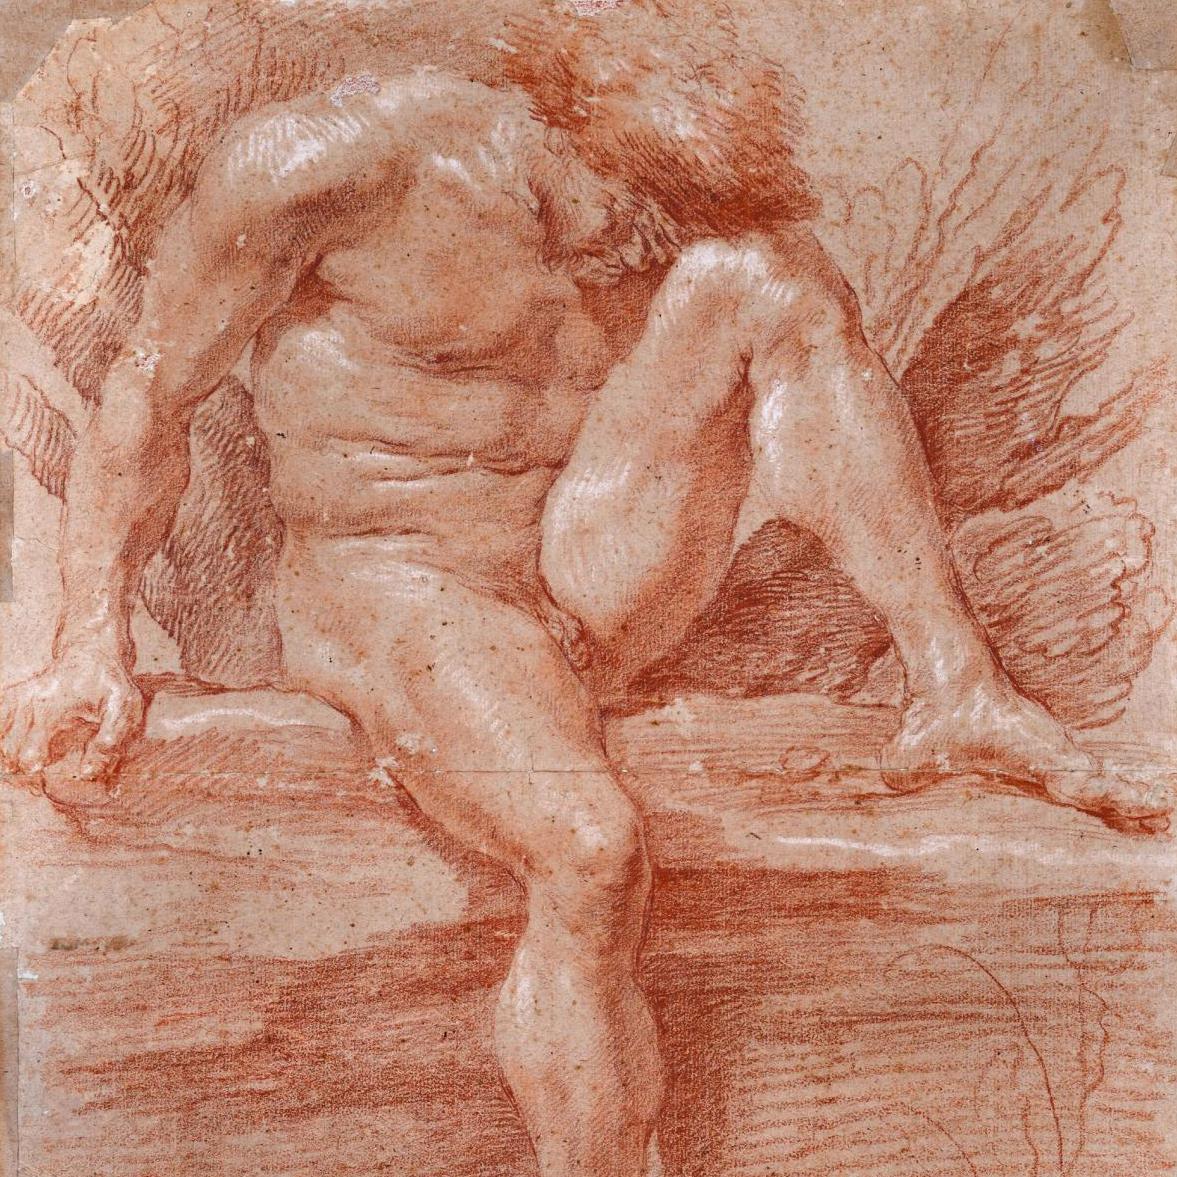 A Record for a Bernini Male Nude - Lots sold